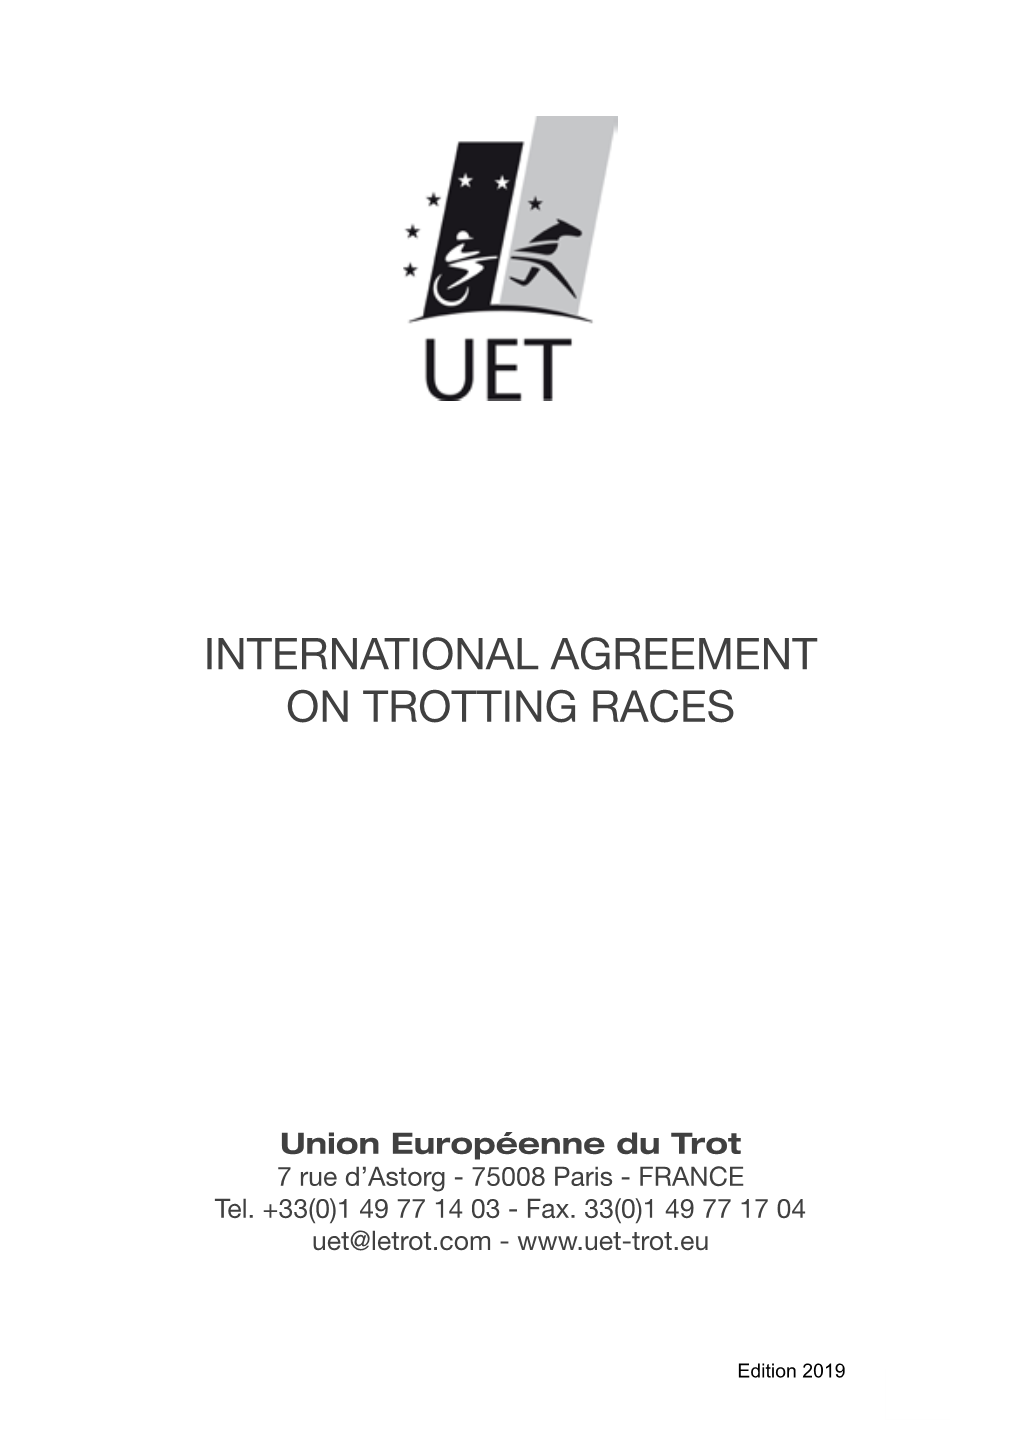 International Agreement on Trotting Races